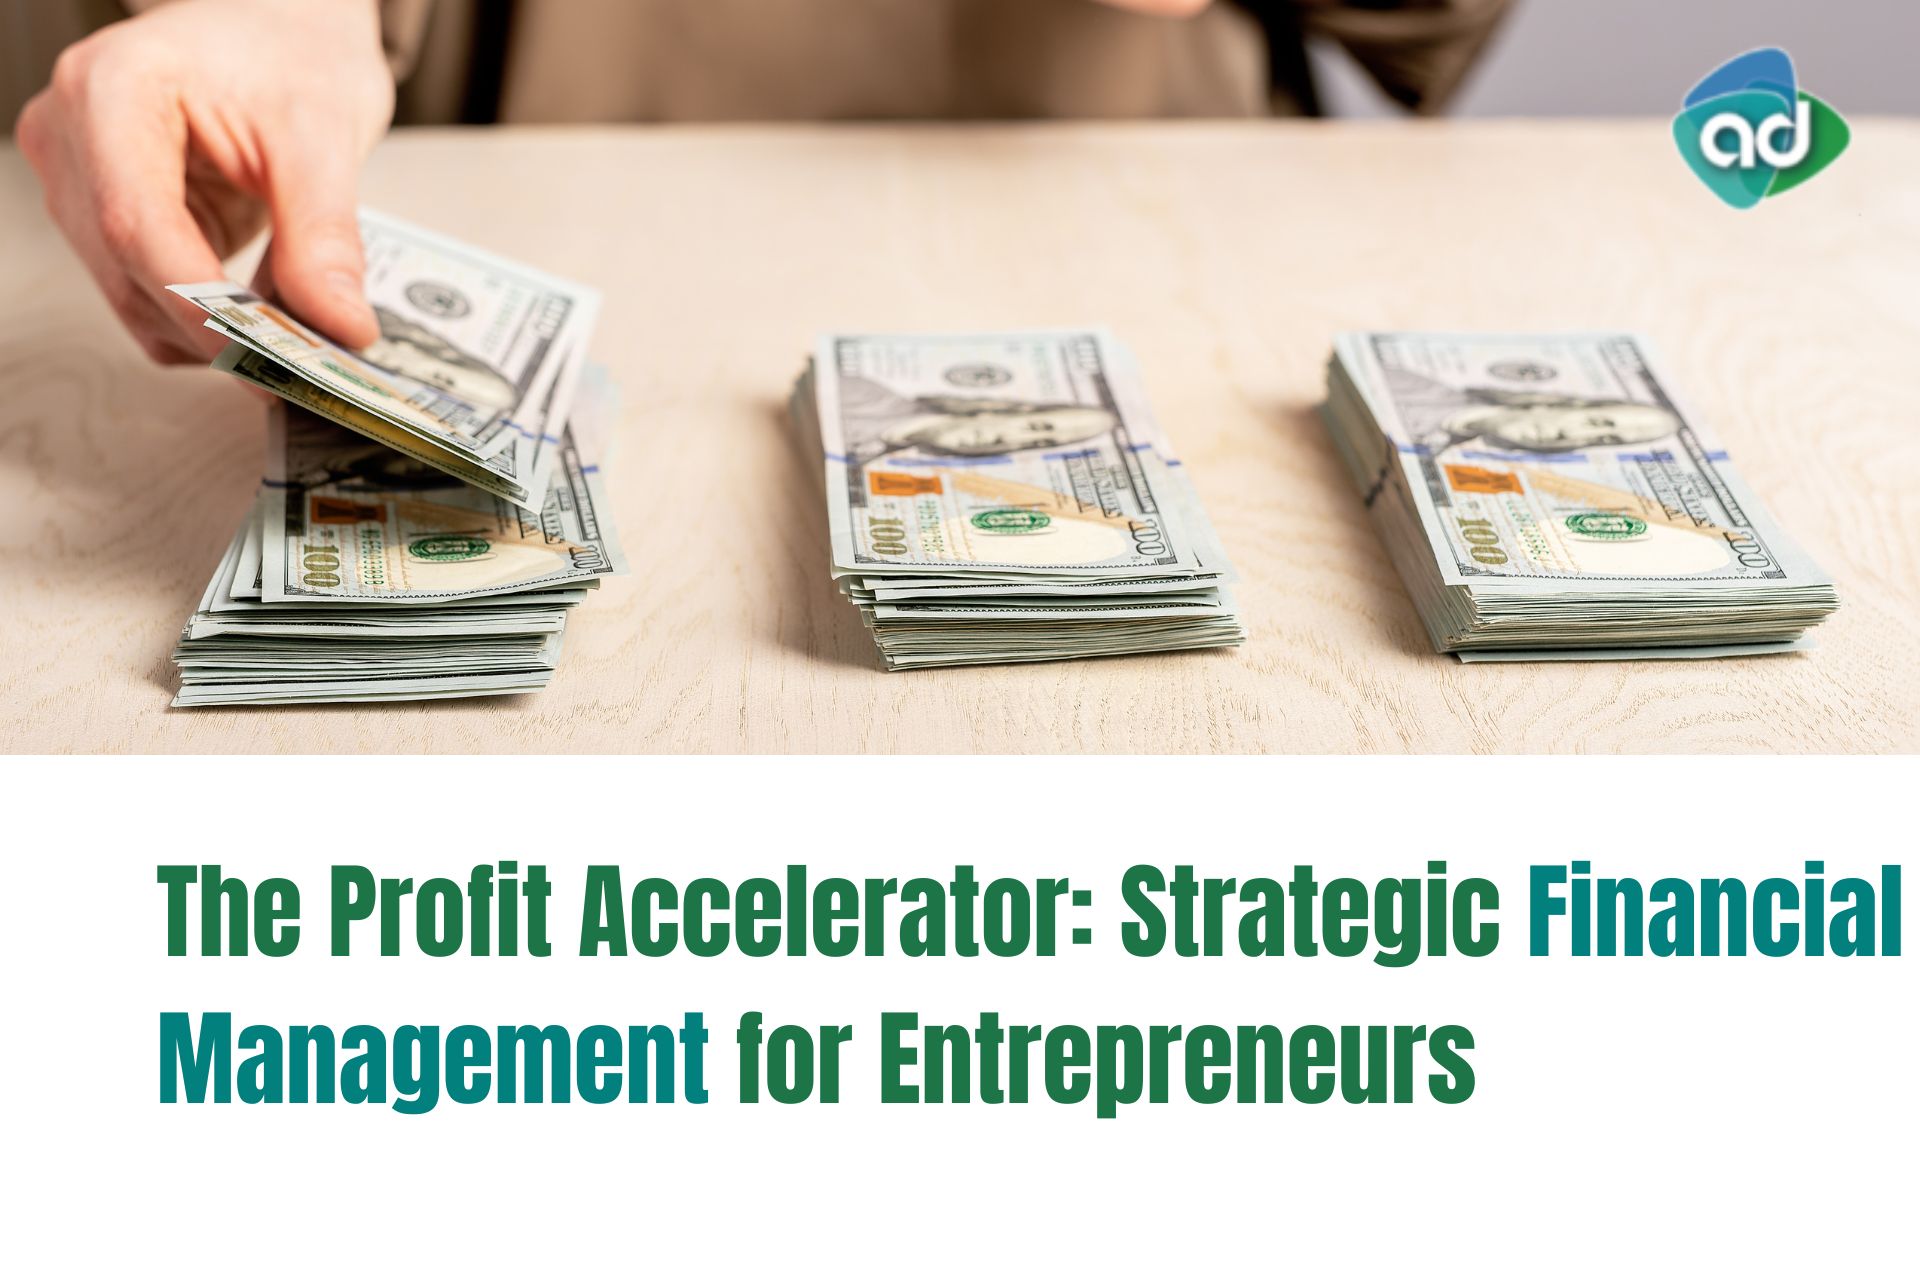 The Profit Accelerator: Strategic Financial Management for Entrepreneurs